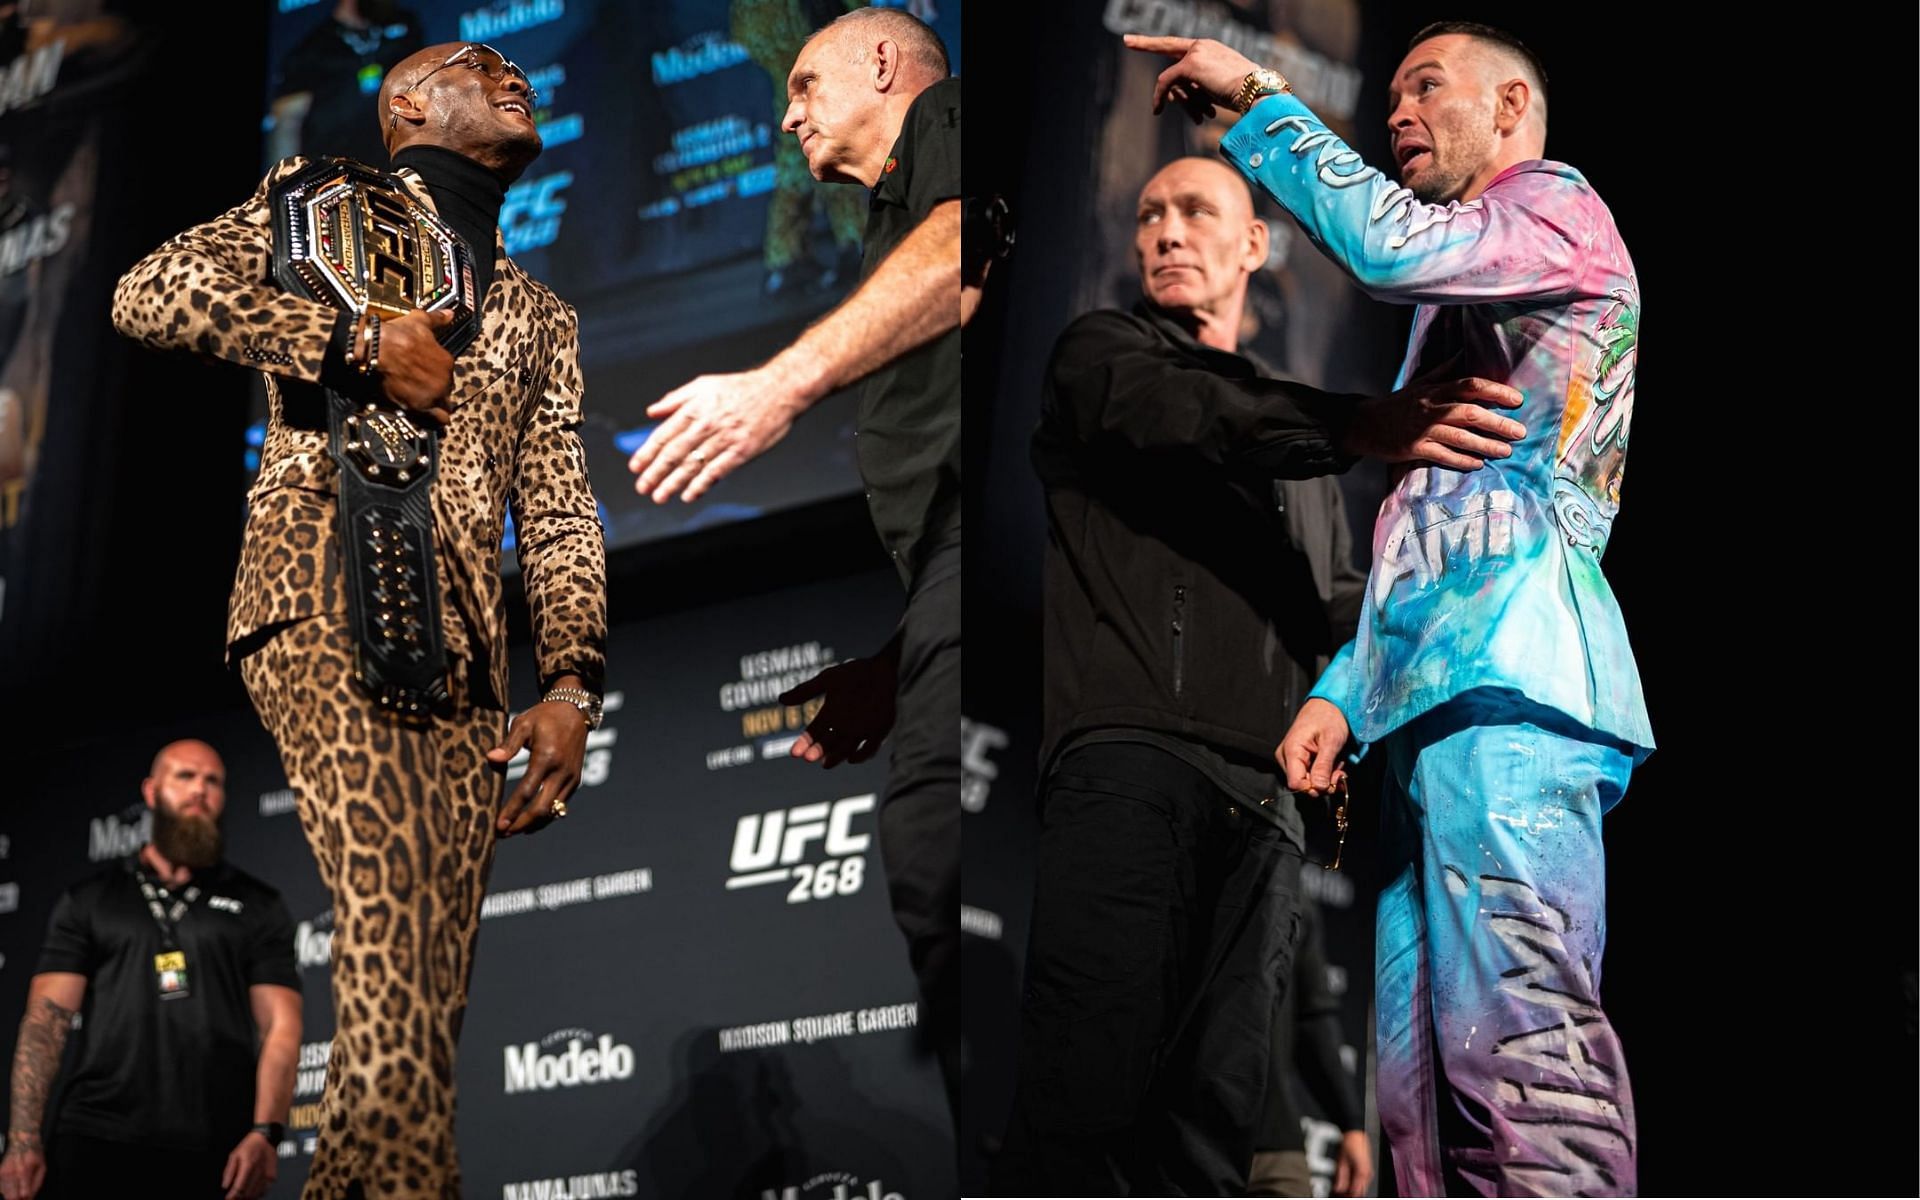 Kamaru Usman will defend his 170-pound belt against Colby Covington at UFC 268 [Image credit: @ufc via Instagram]